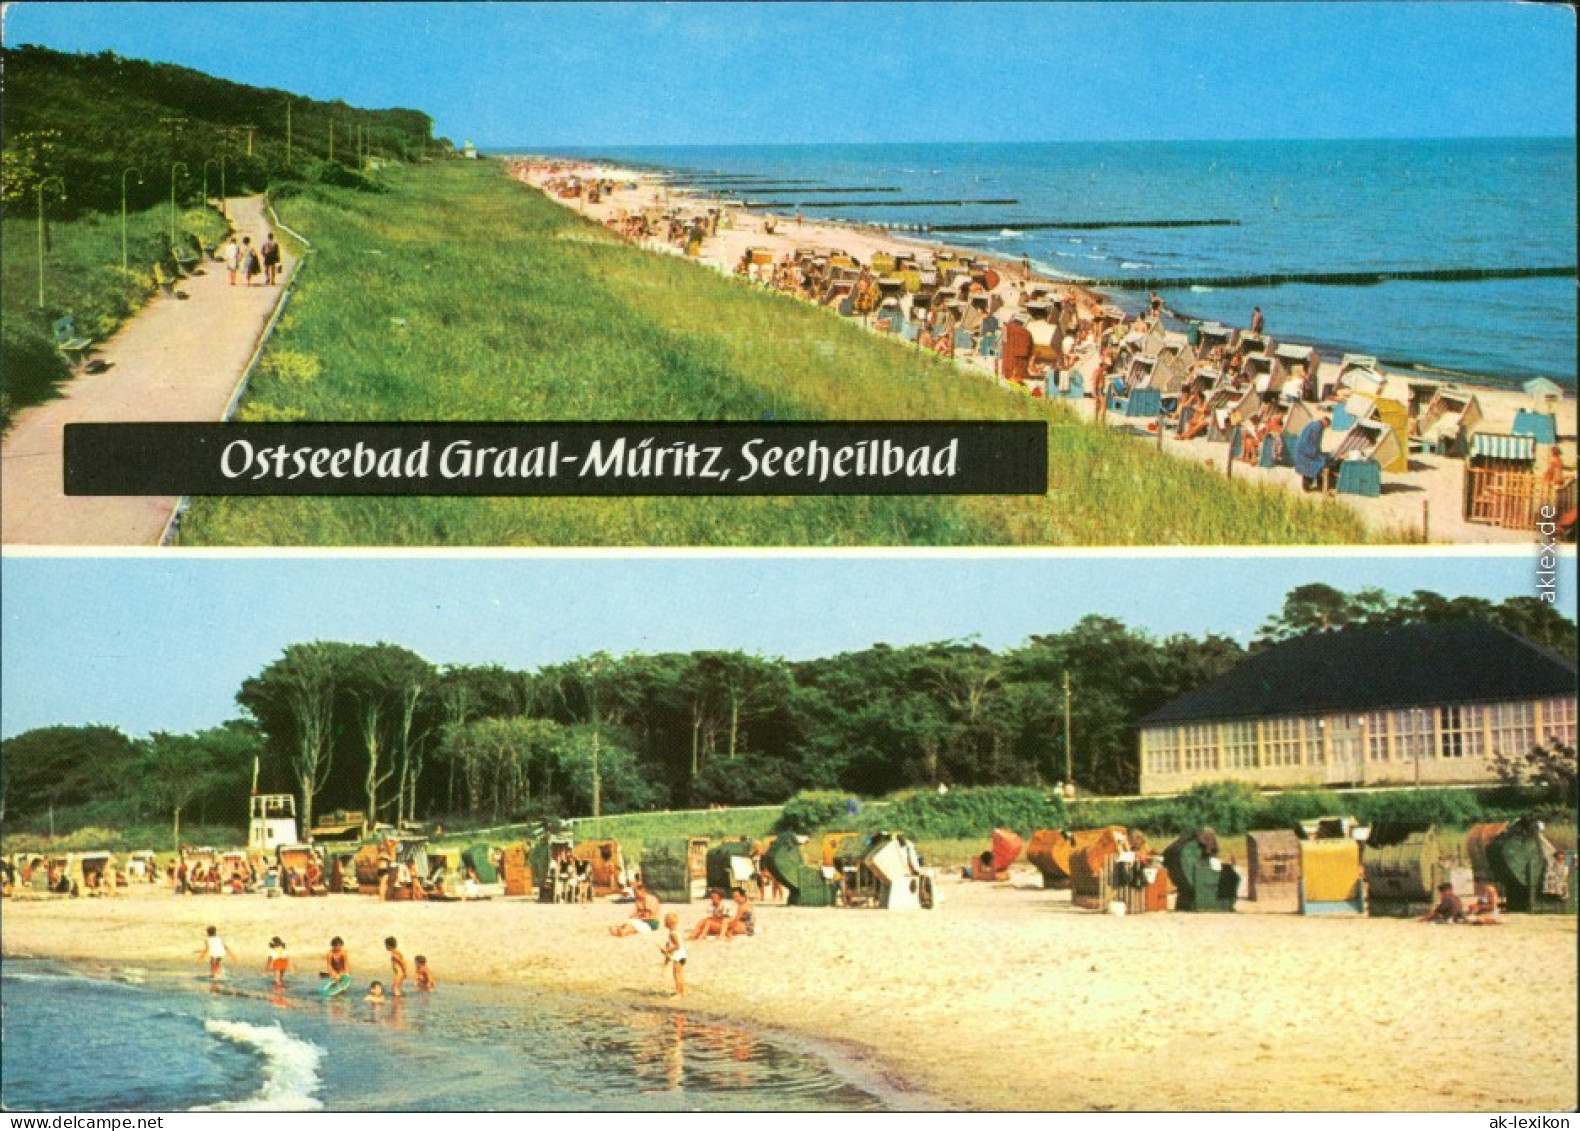 Ansichtskarte Graal-Müritz Ostseebad Graal-Müritz Seeheilbad 1979 - Graal-Müritz